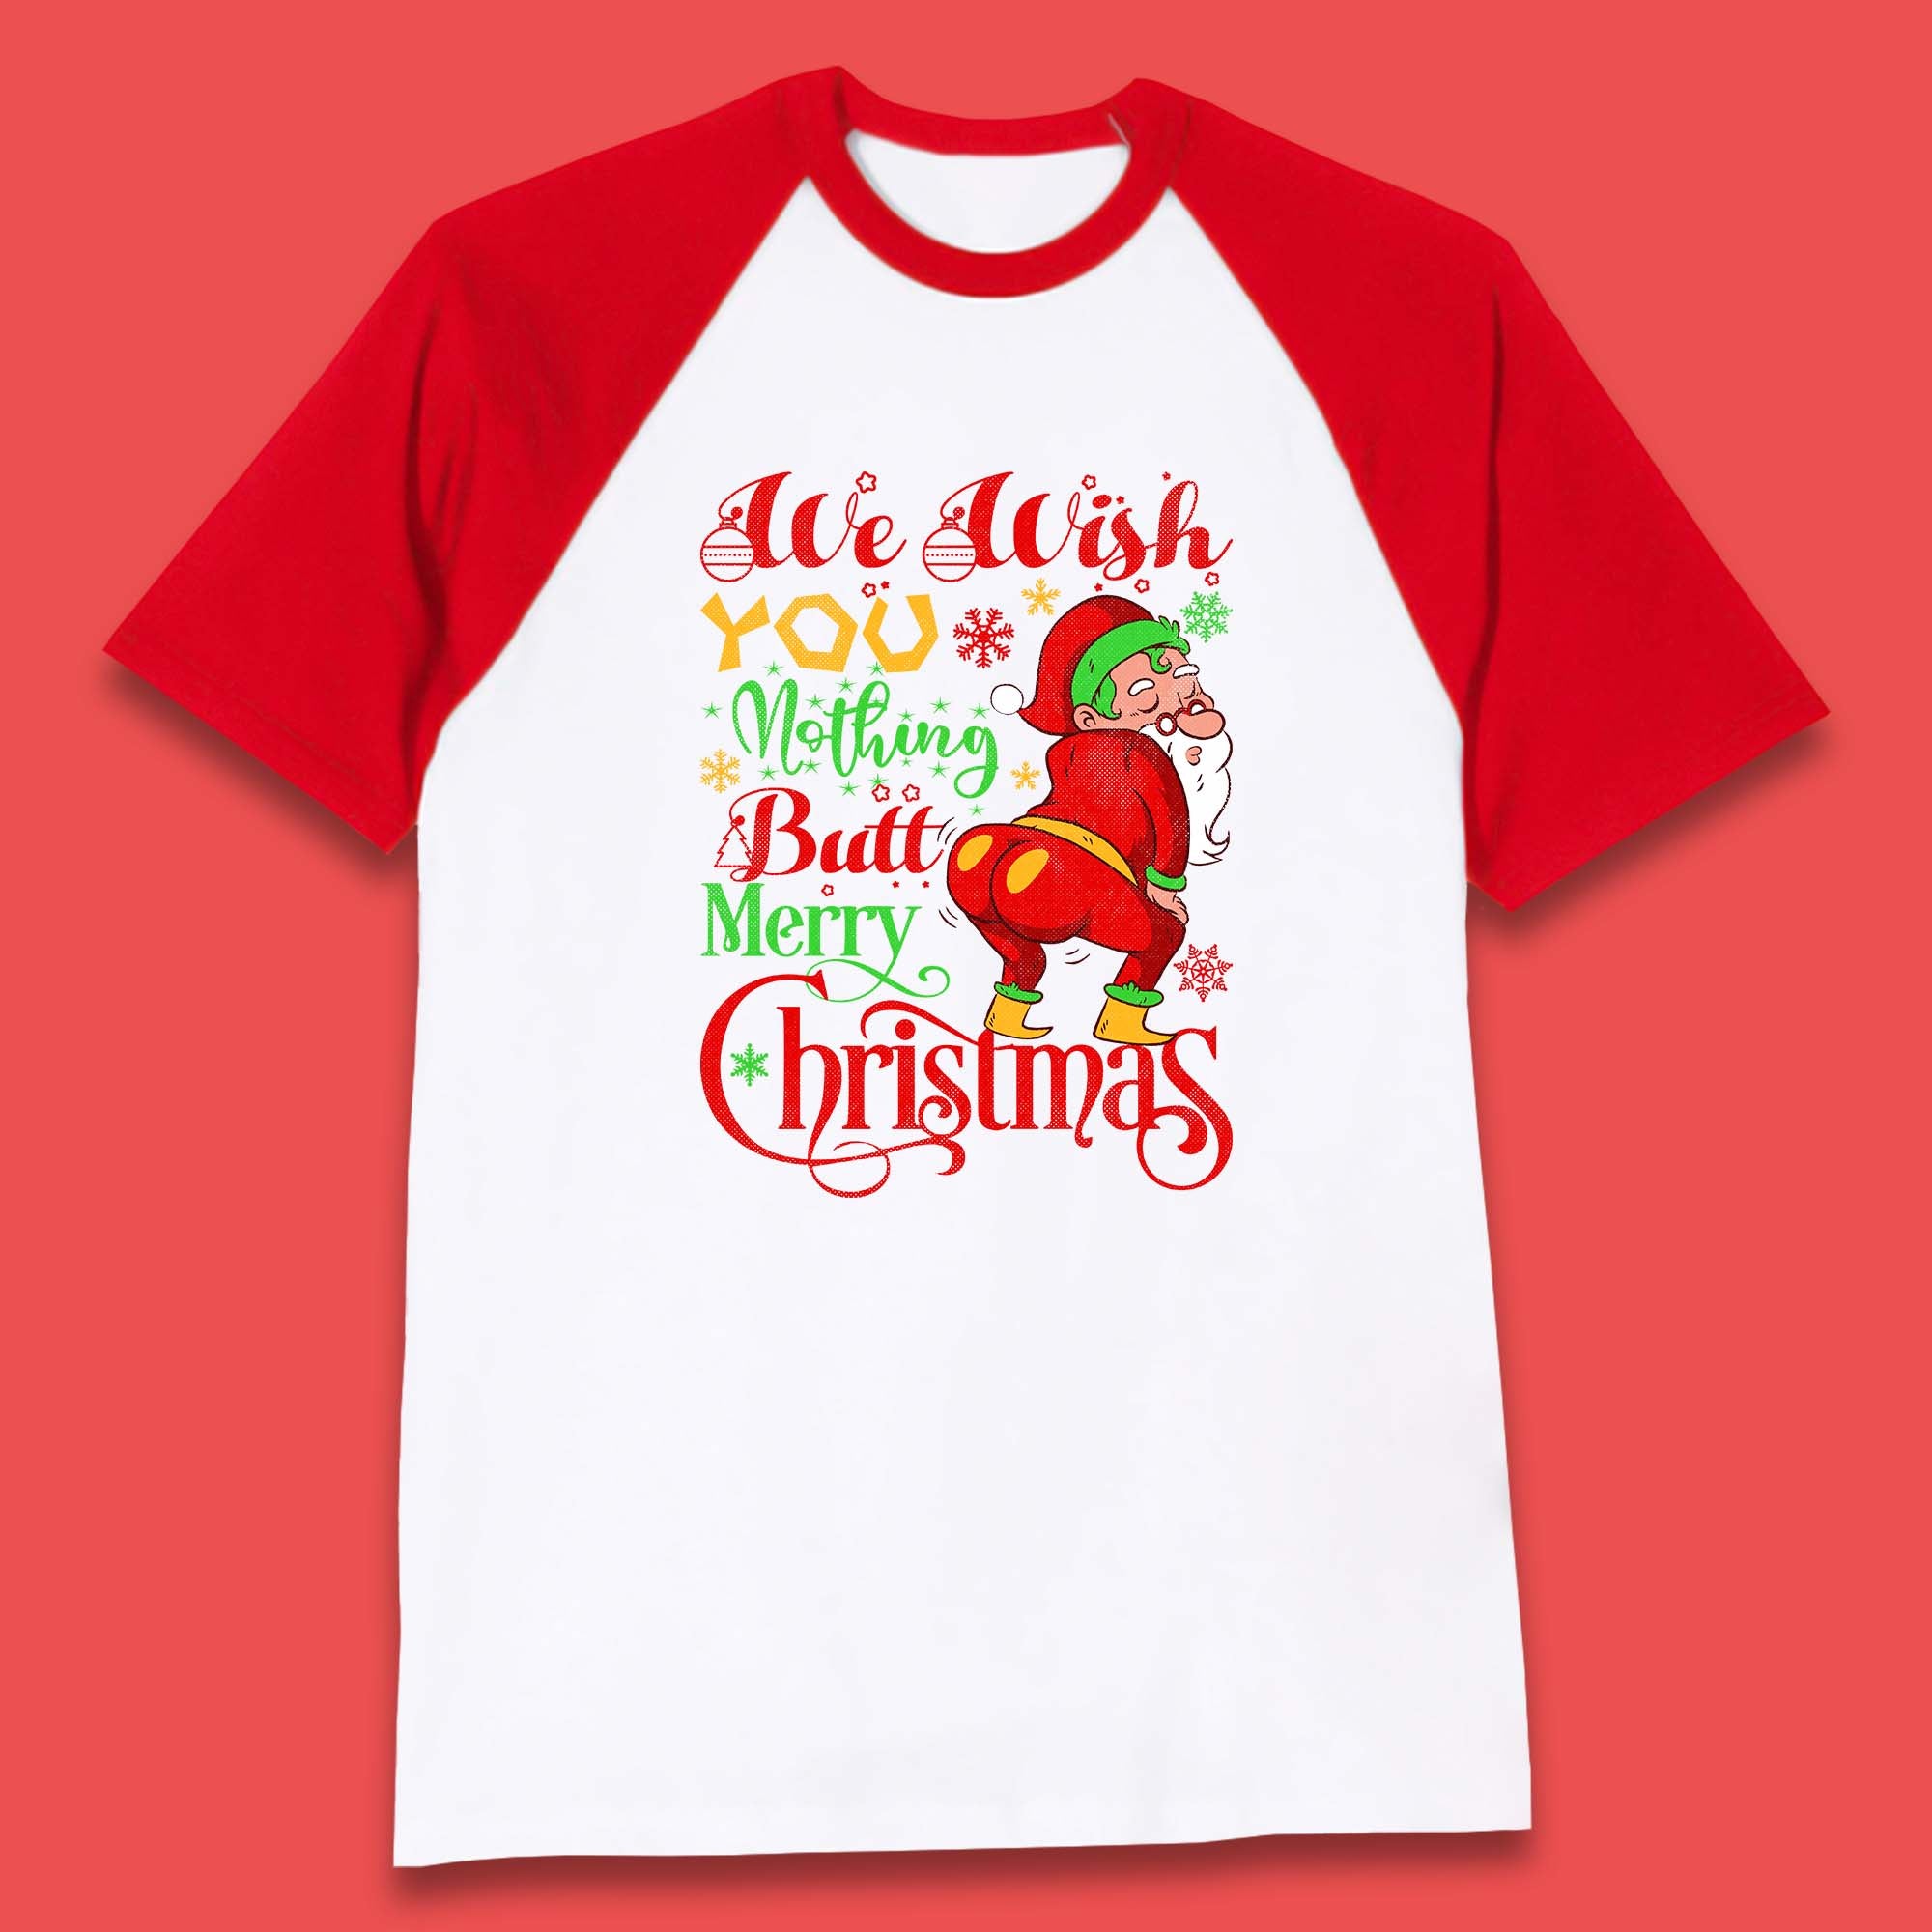 We Wish You Nothing Butt Merry Christmas Funny Naughty Santa Claus Xmas Baseball T Shirt